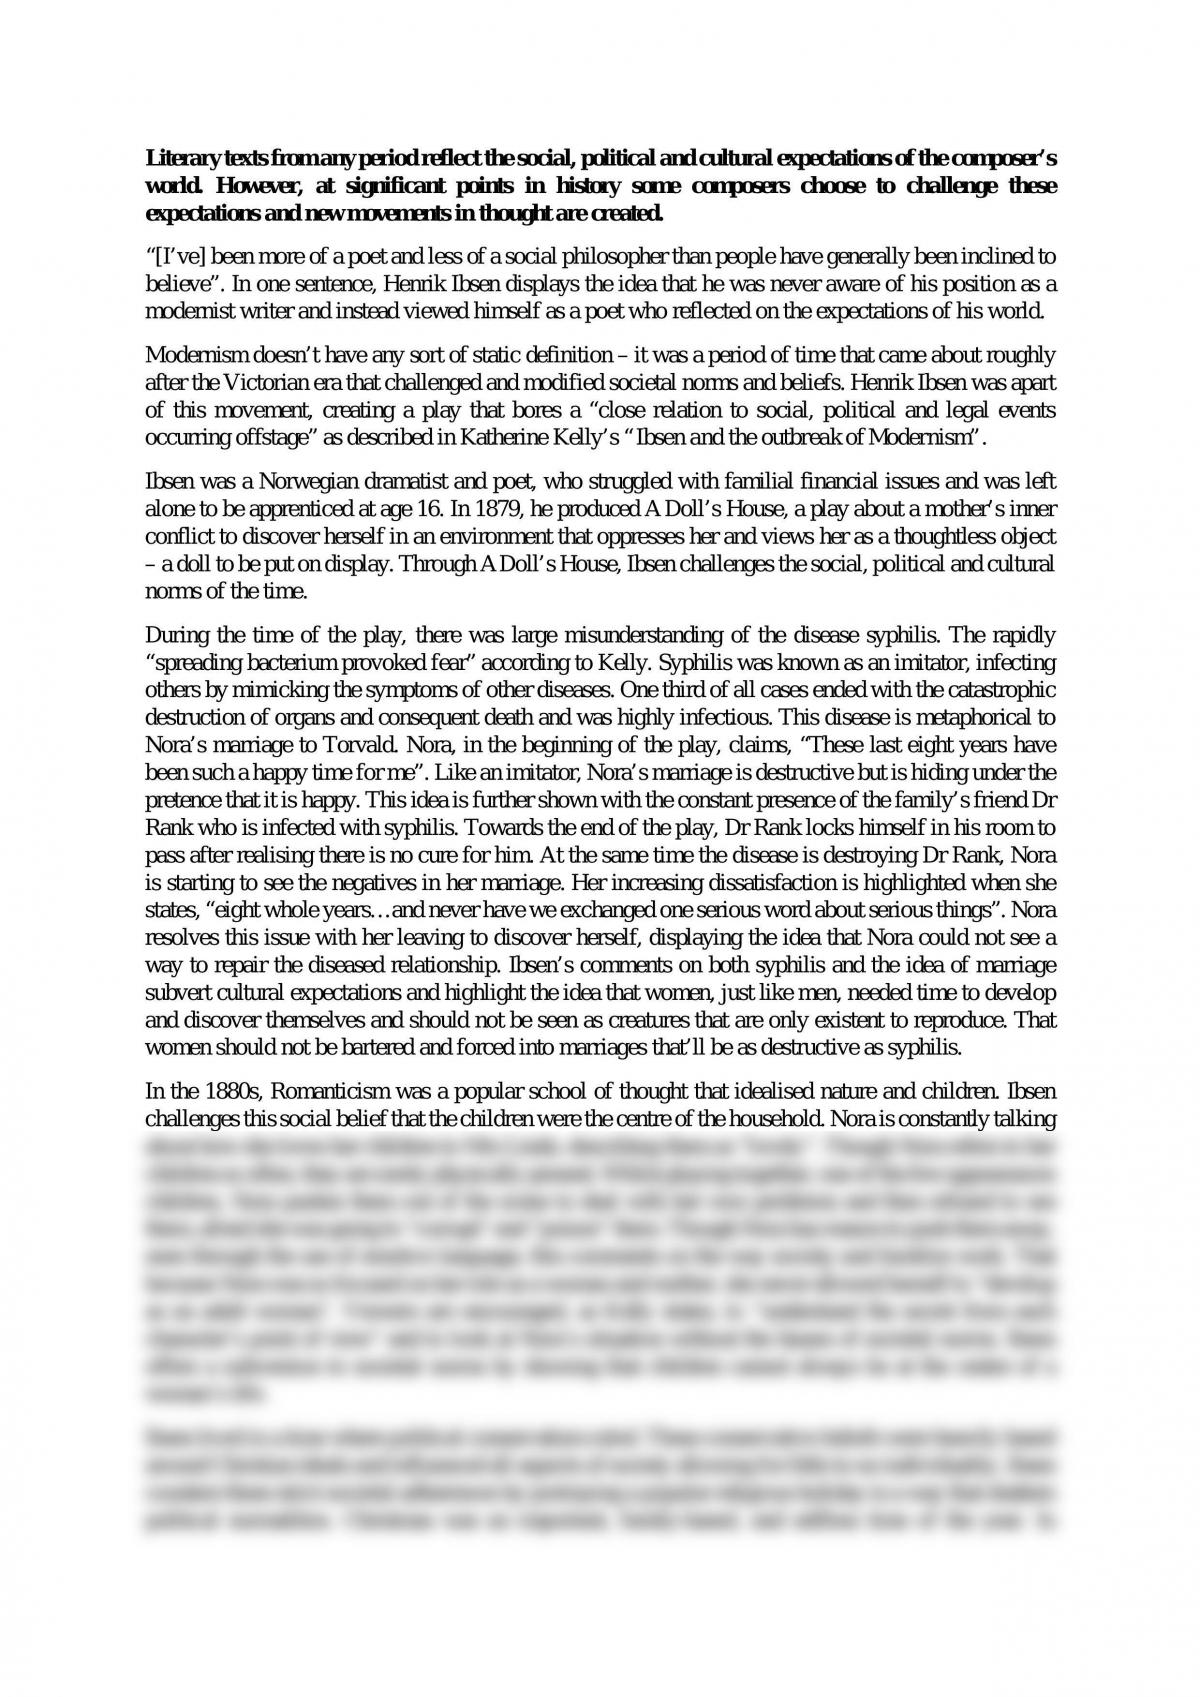 modernism essay pdf